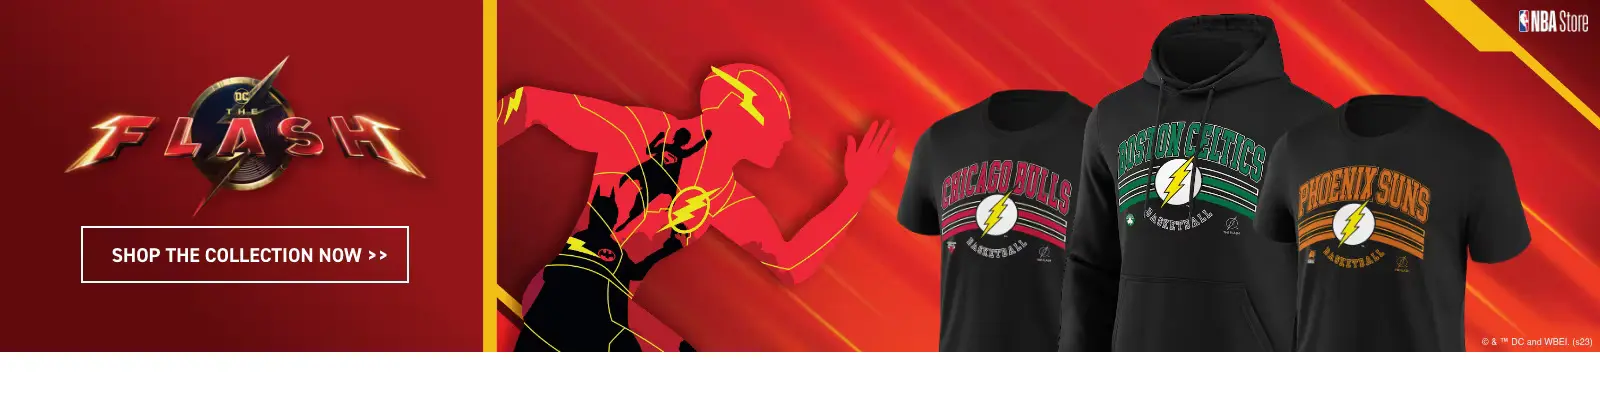 NBA X DC Flash Collection banner